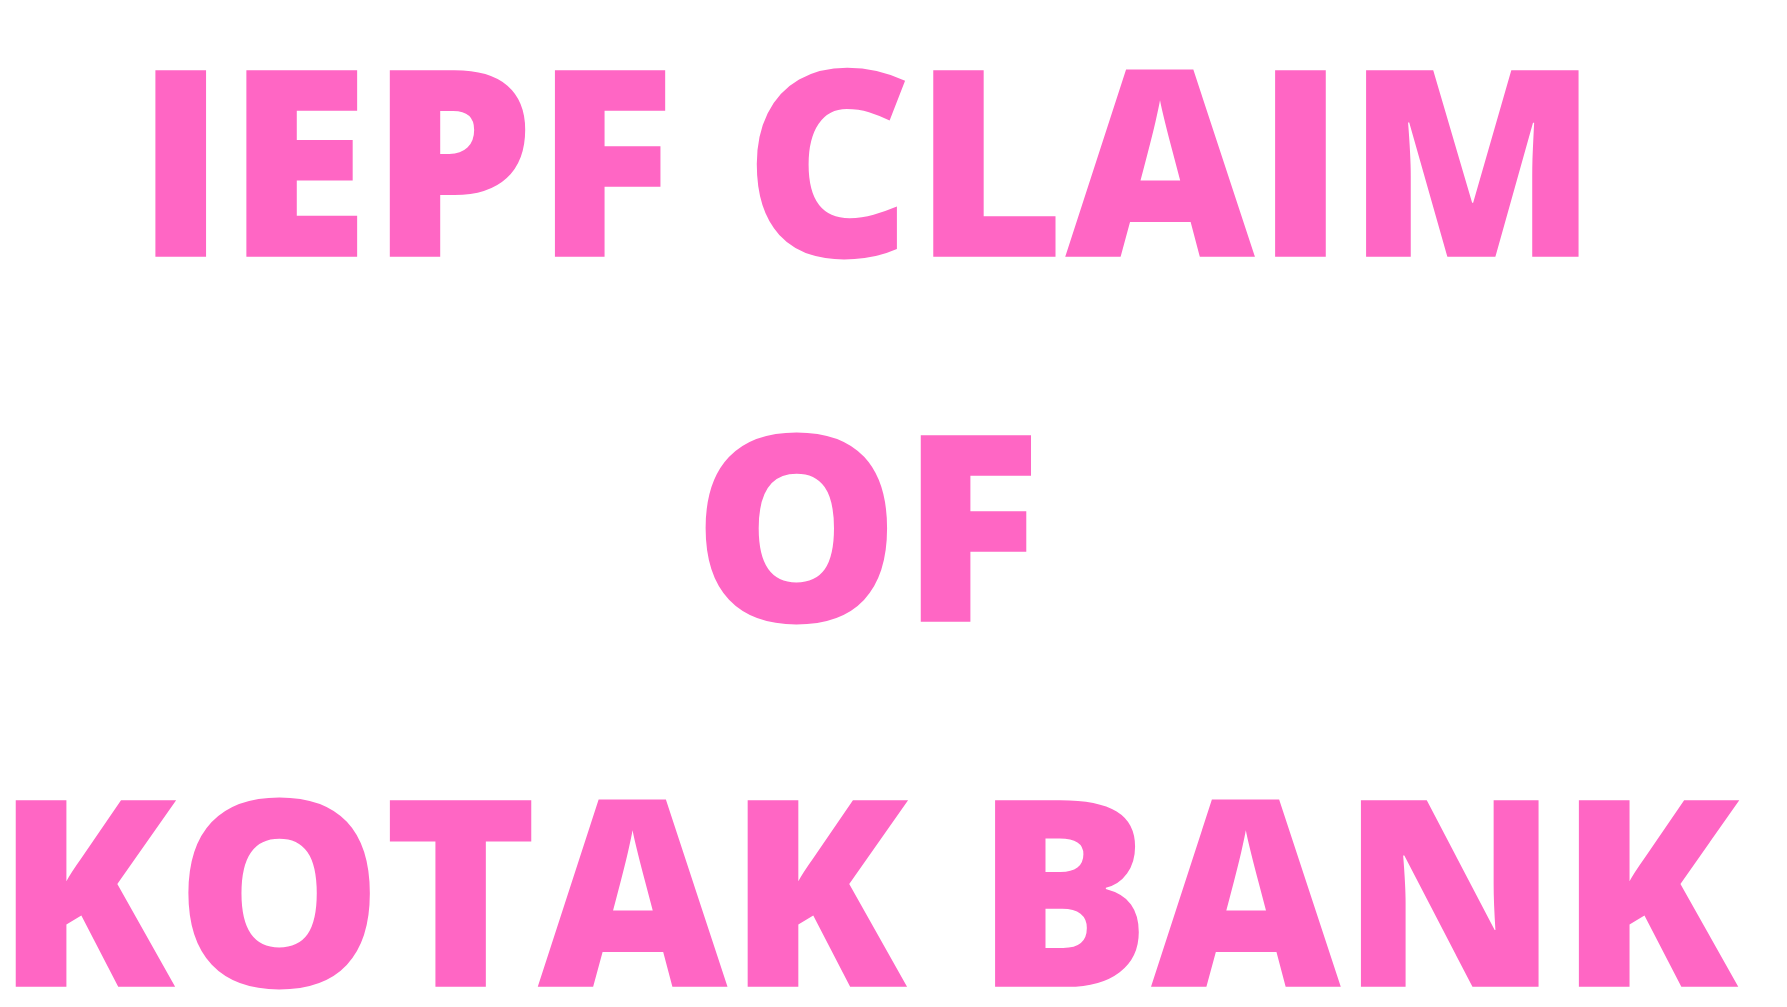 Want to Claim Kotak Mahindra Bank Shares from IEPF?